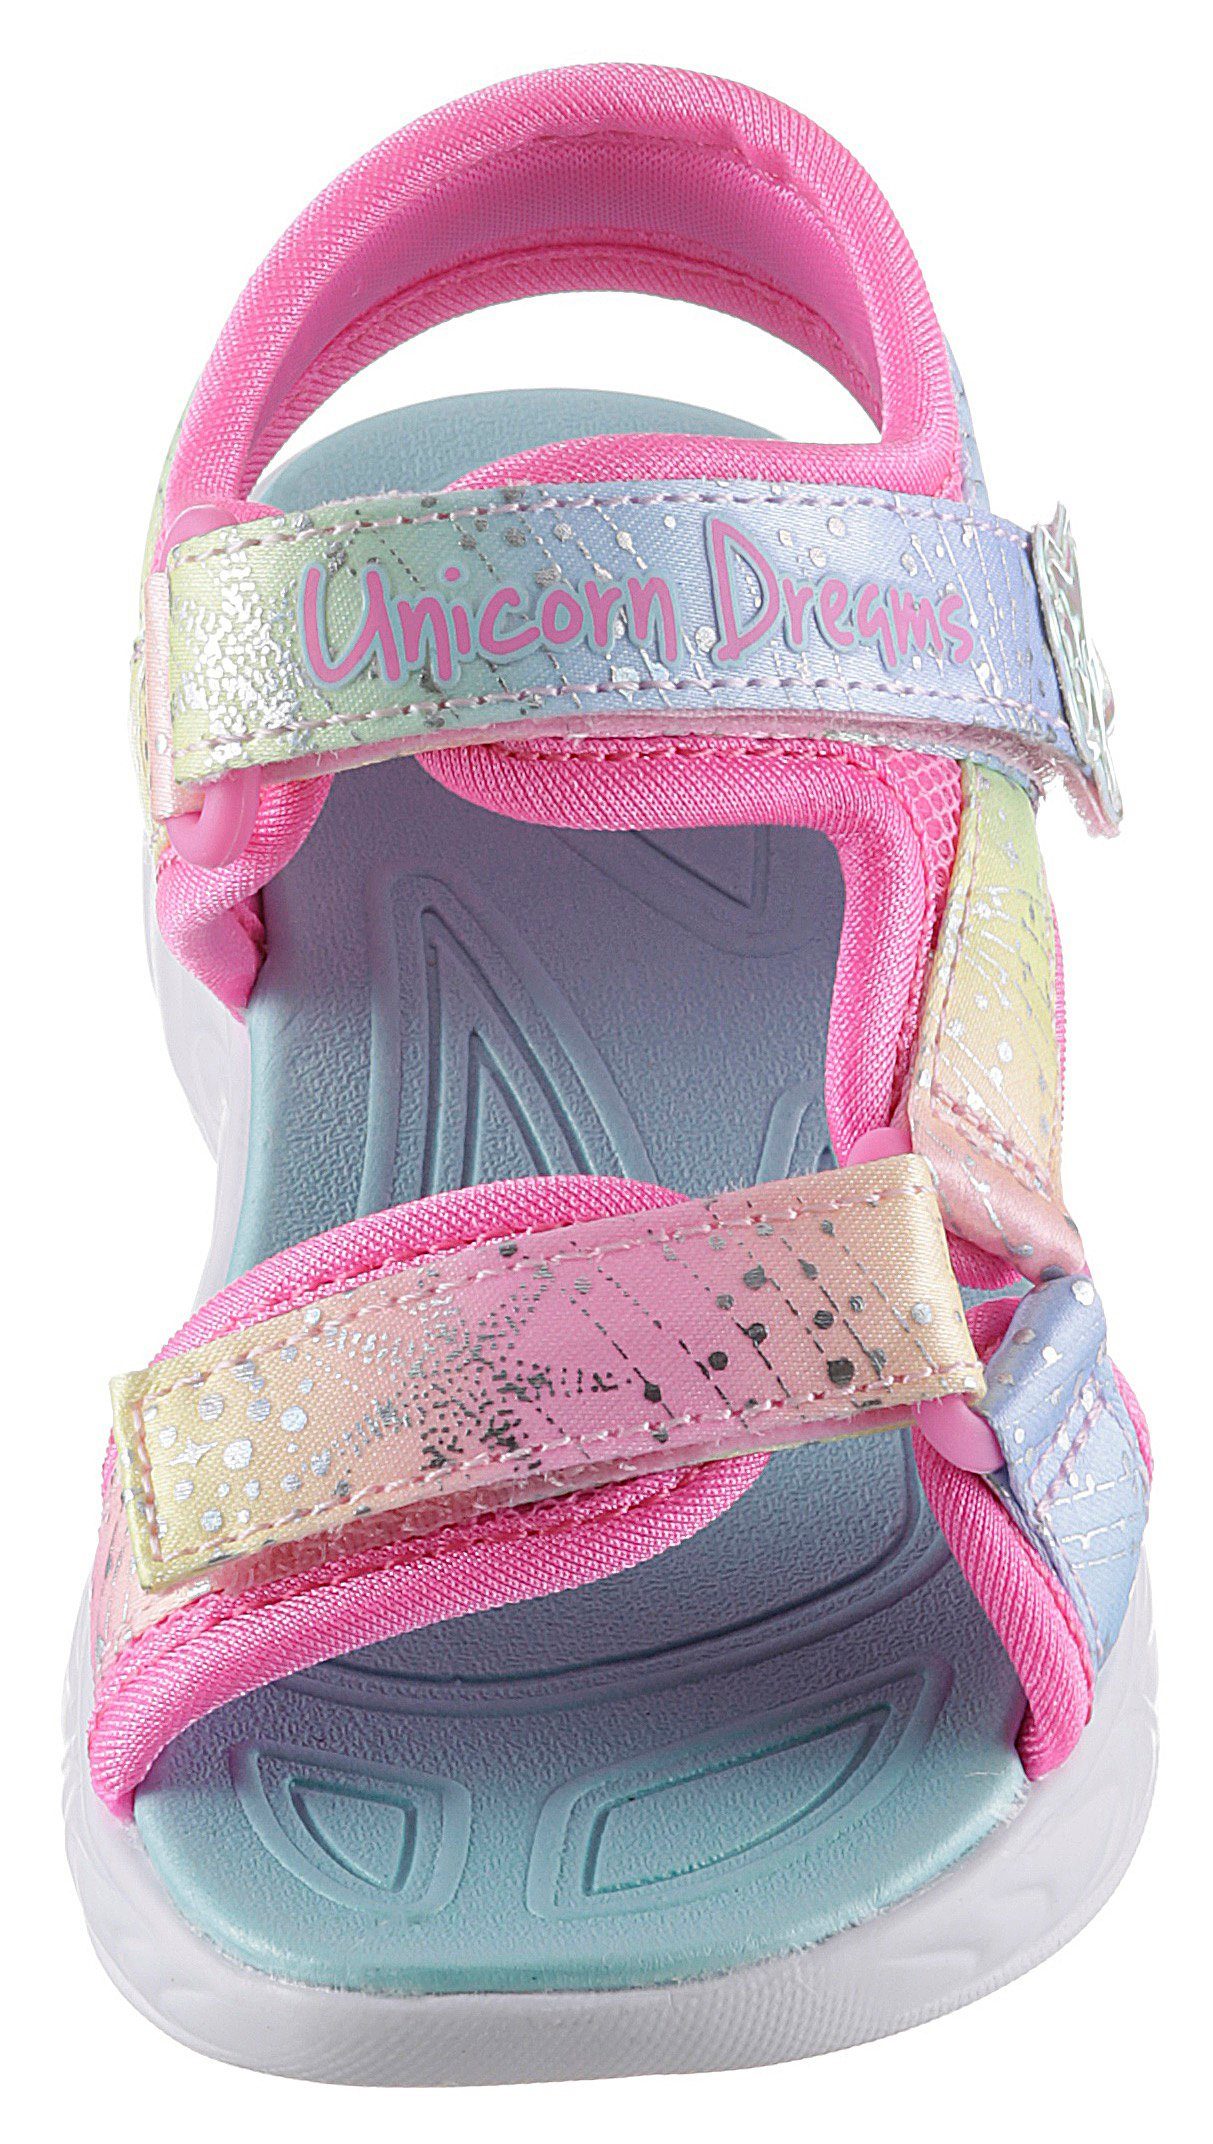 Skechers Kids DREAMS pink-kombiniert Schritt leuchtet UNICORN MAJESTIC BLISS jedem SANDAL bei Sandale